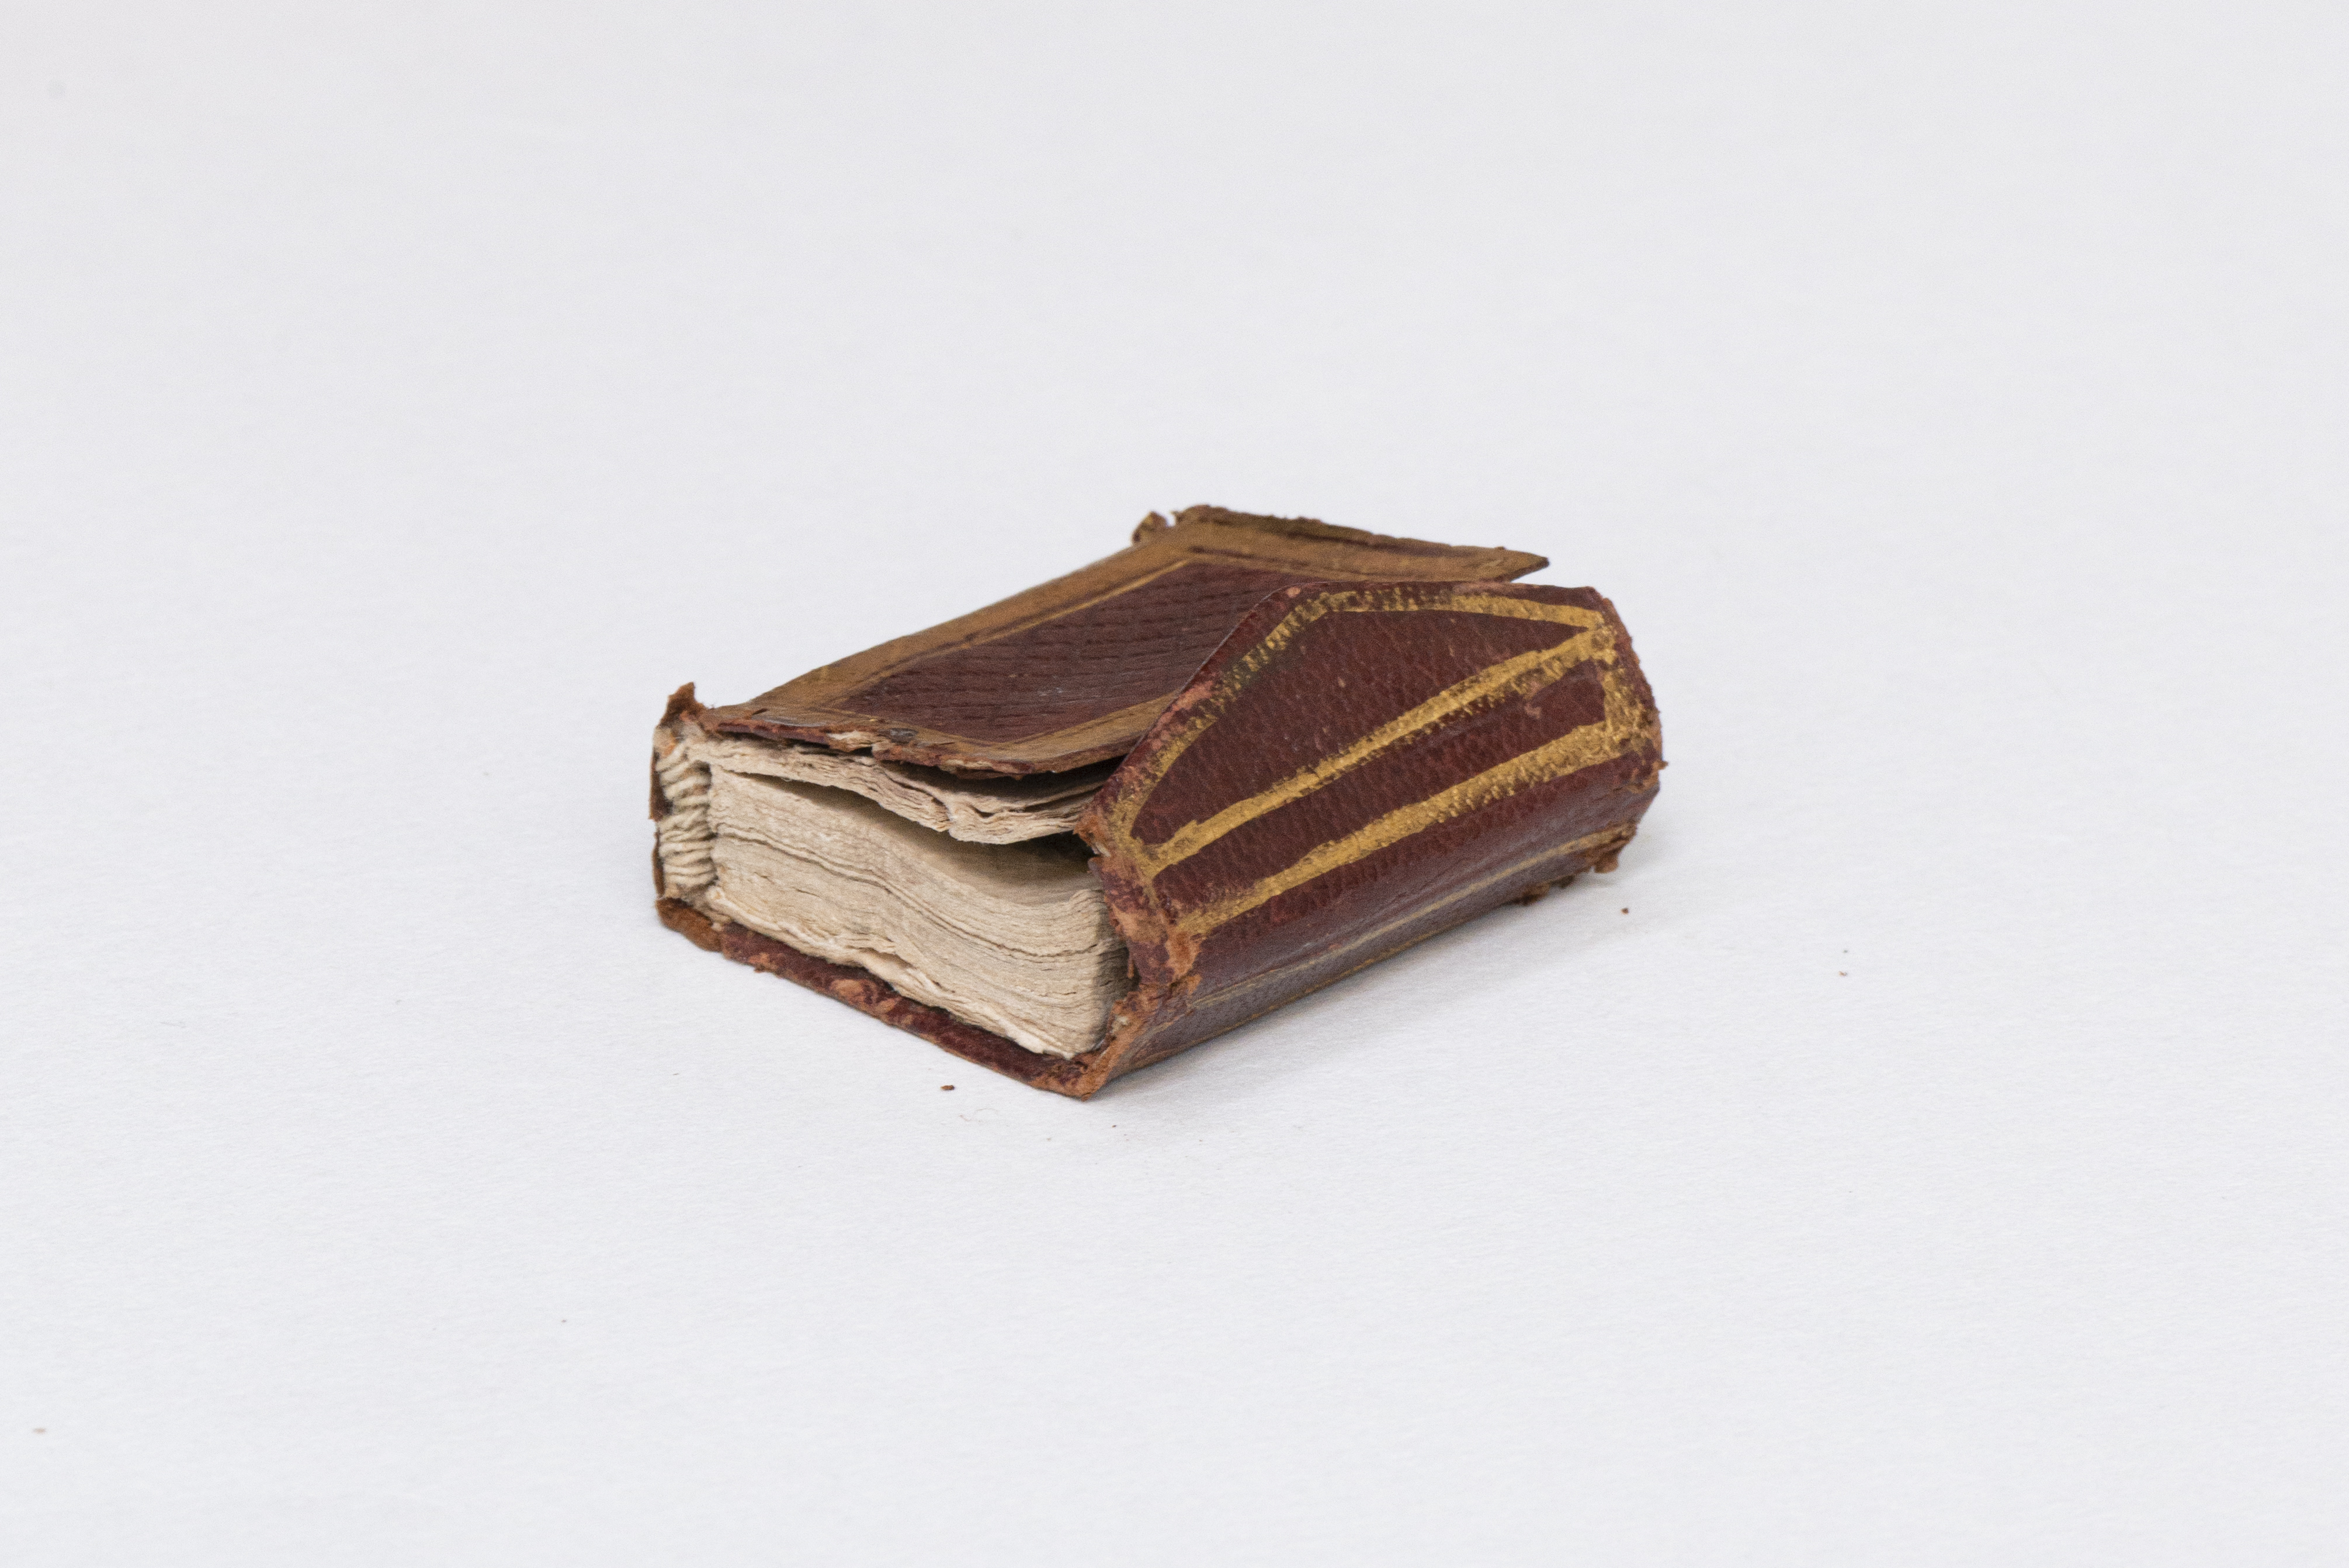 goat leather bound miniature Quran